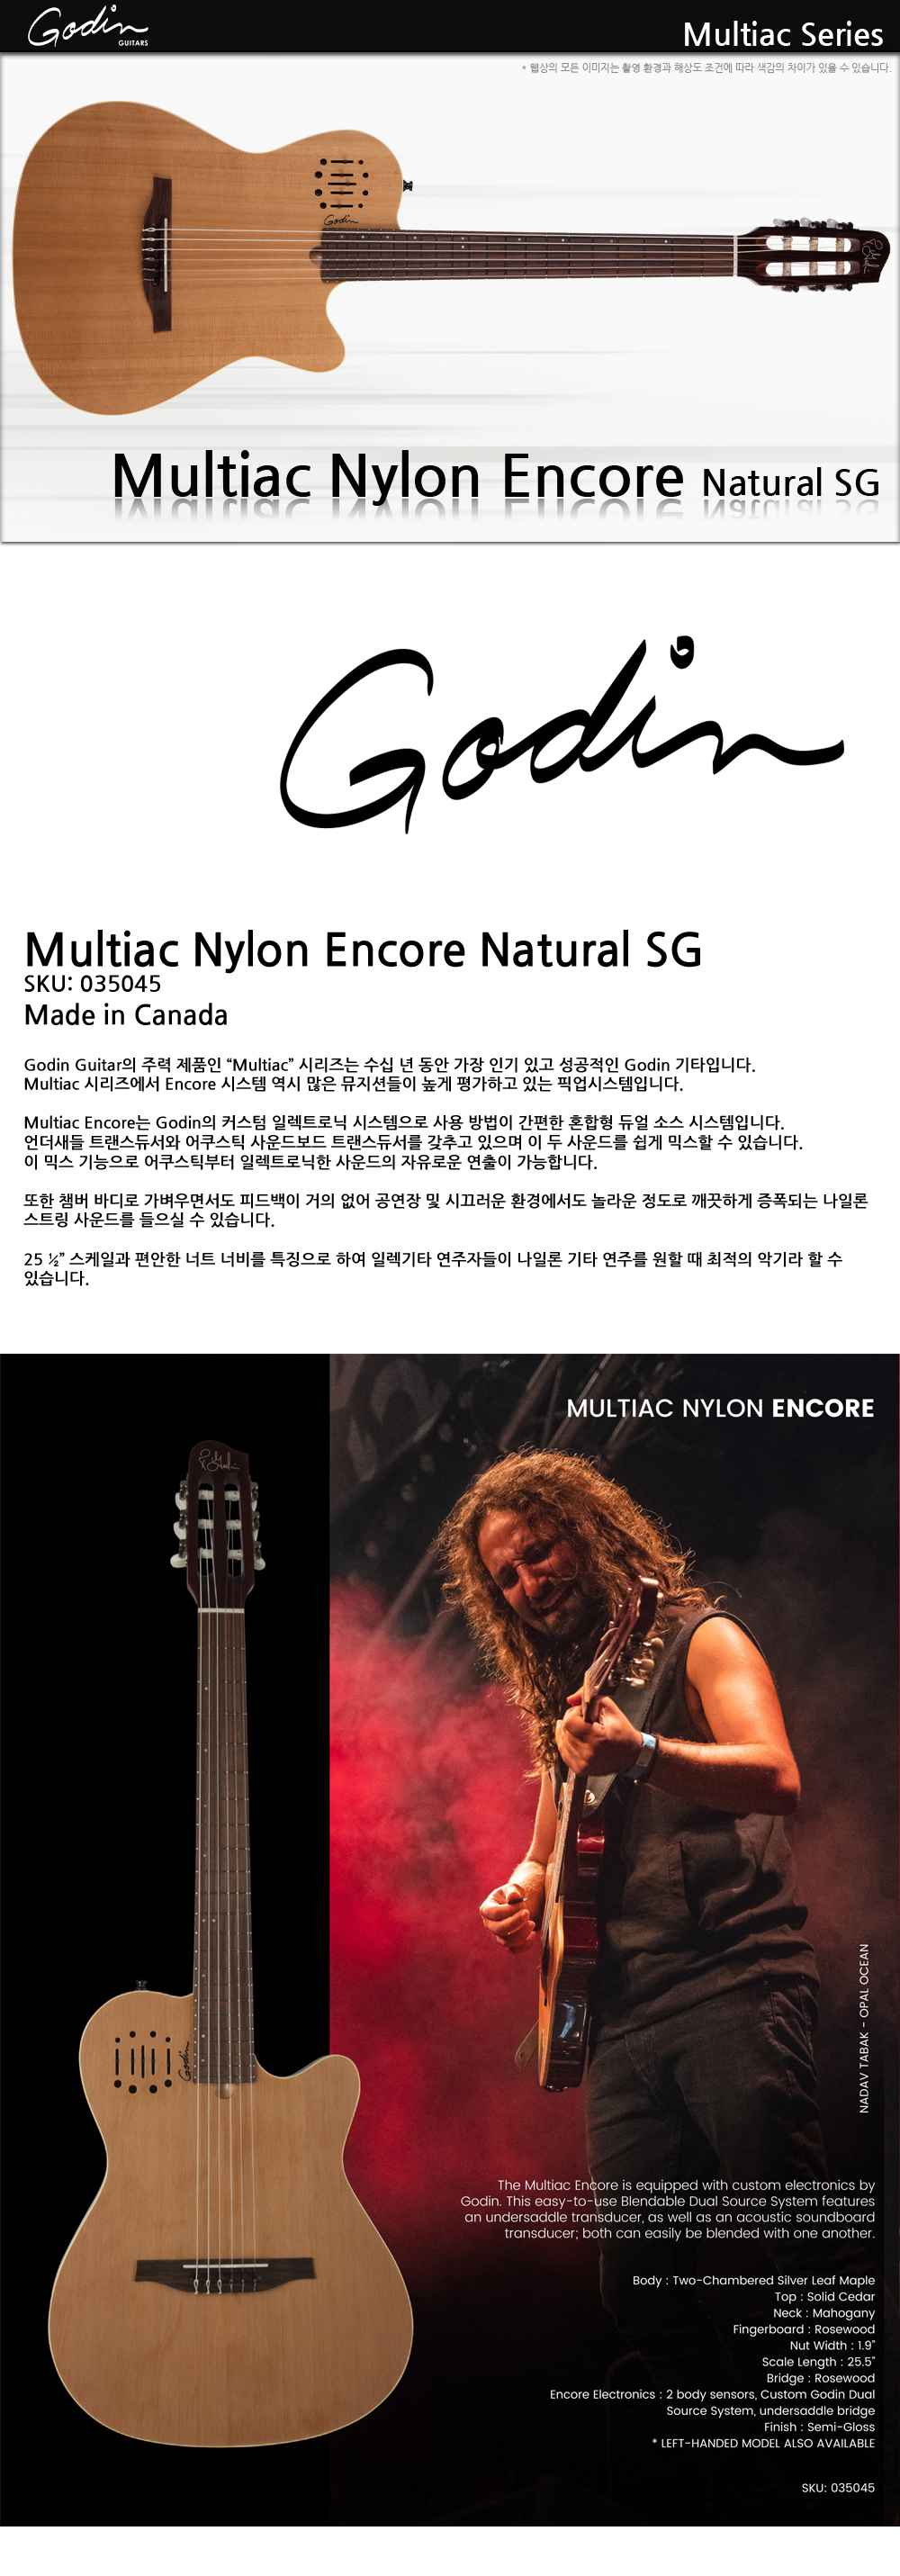 Godin-035045-Multiac-Nylon-Encore-Natural-SG_1_111859.jpg